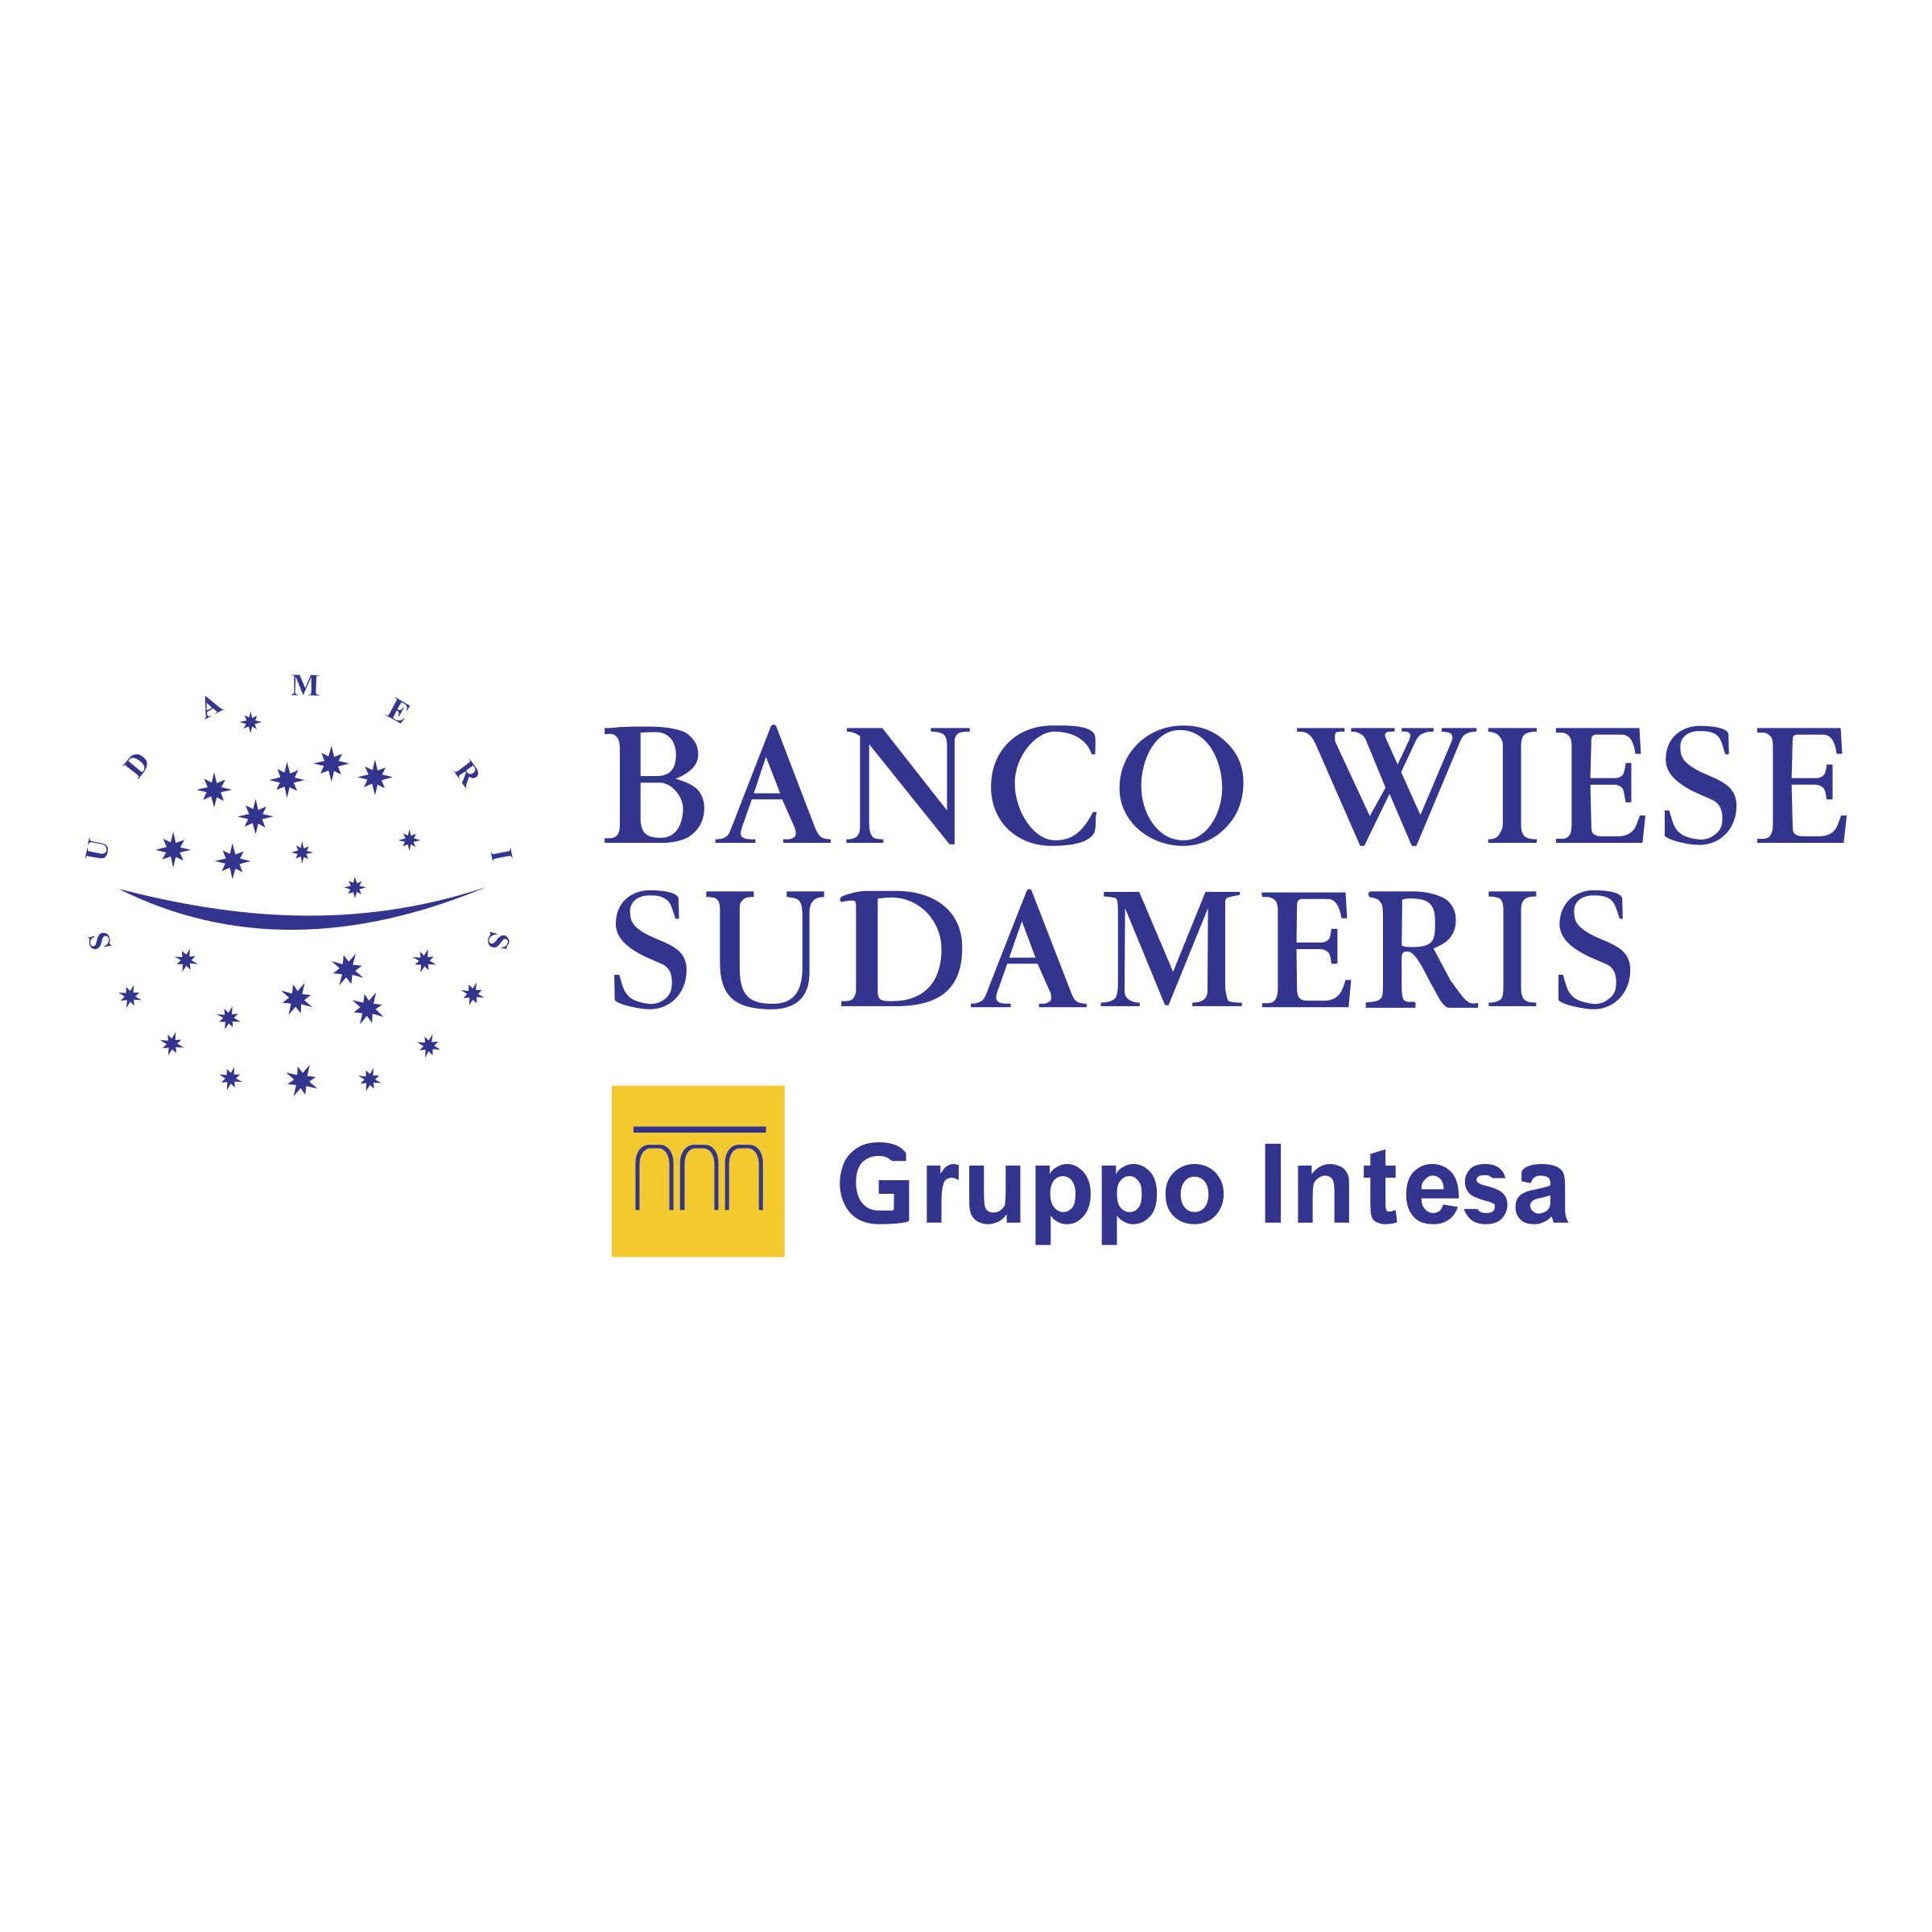 Wiese Logo - Banco Wiese Sudameris Logo PNG Transparent & SVG Vector - Freebie Supply